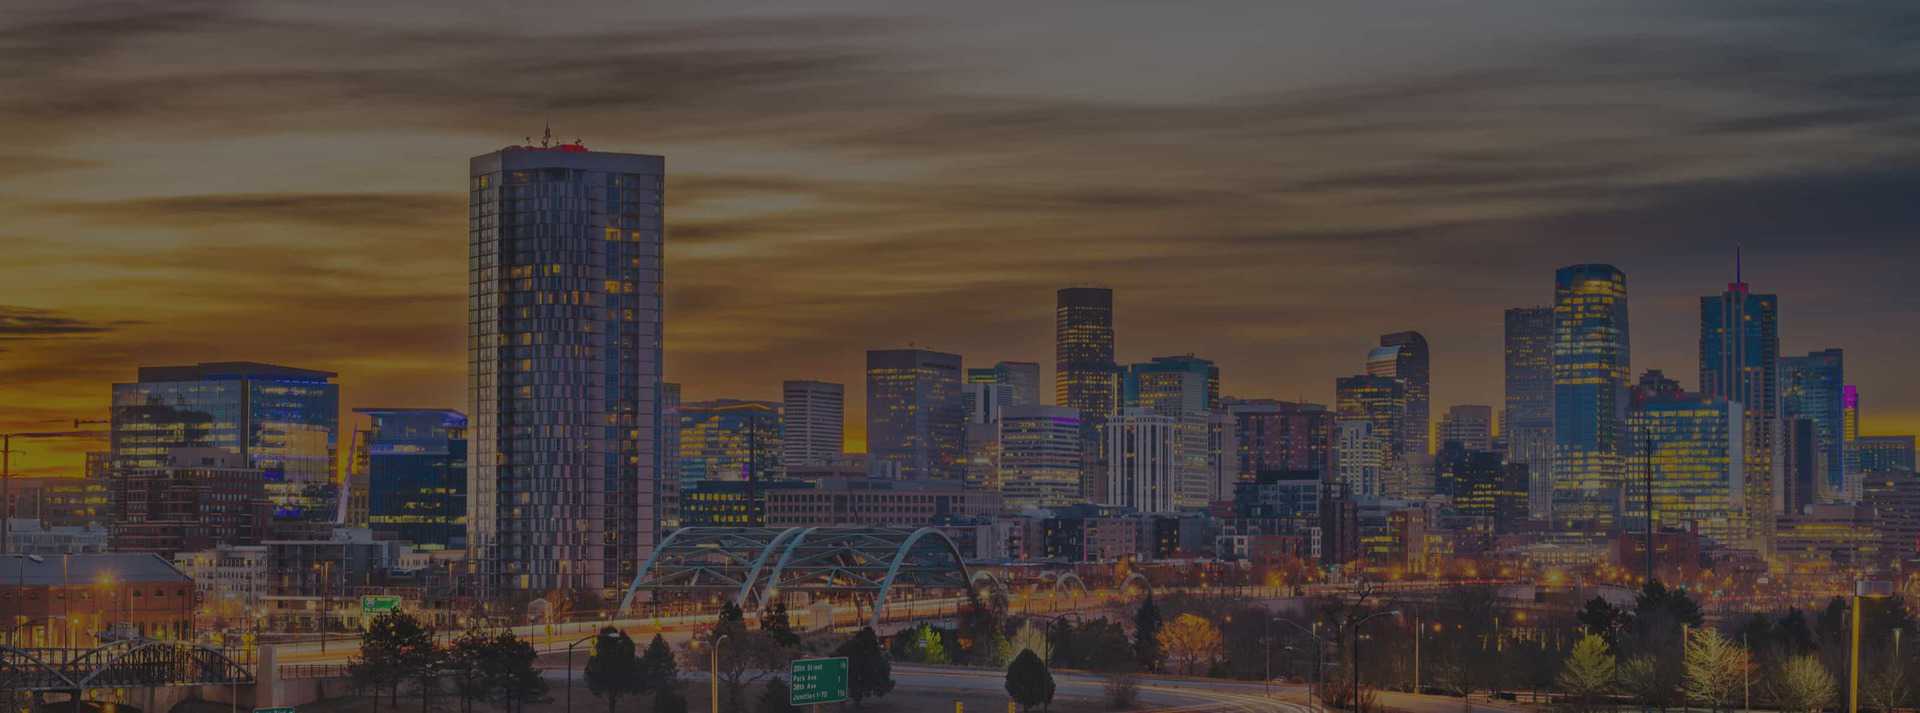 Denver skyline at dusk